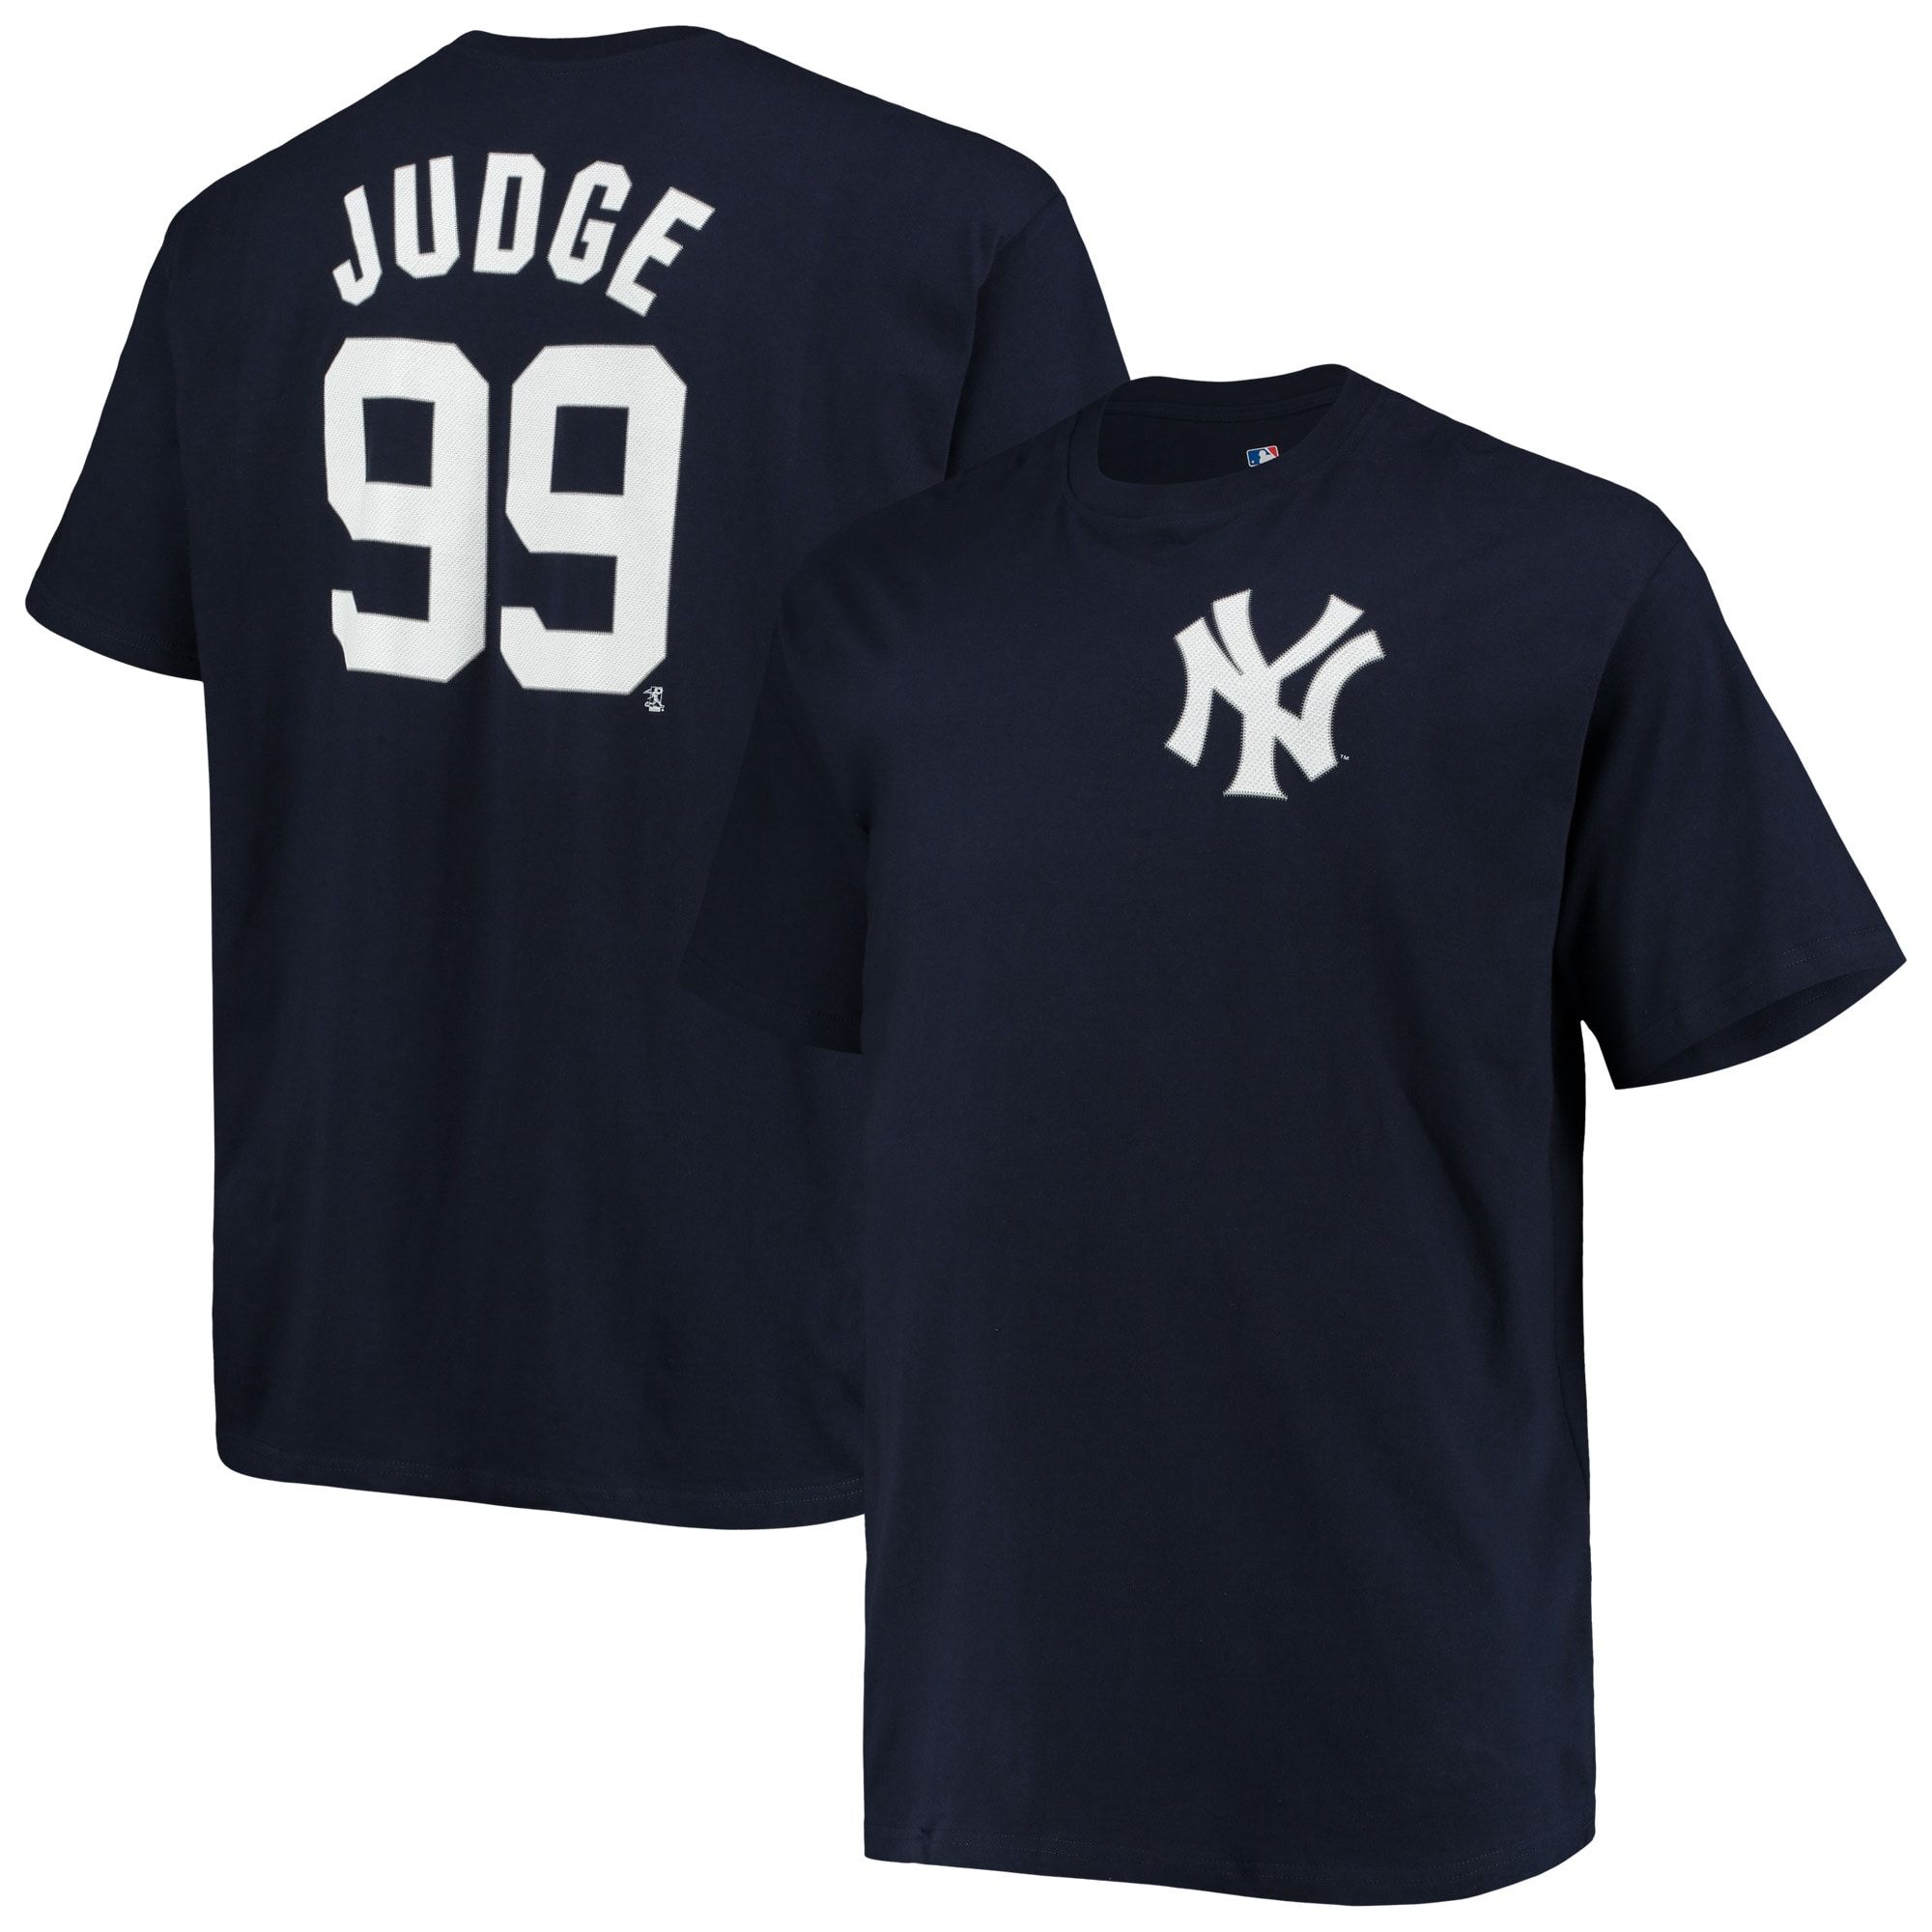  Aaron Judge Number Portrait Baj New York MLBPA T-Shirt